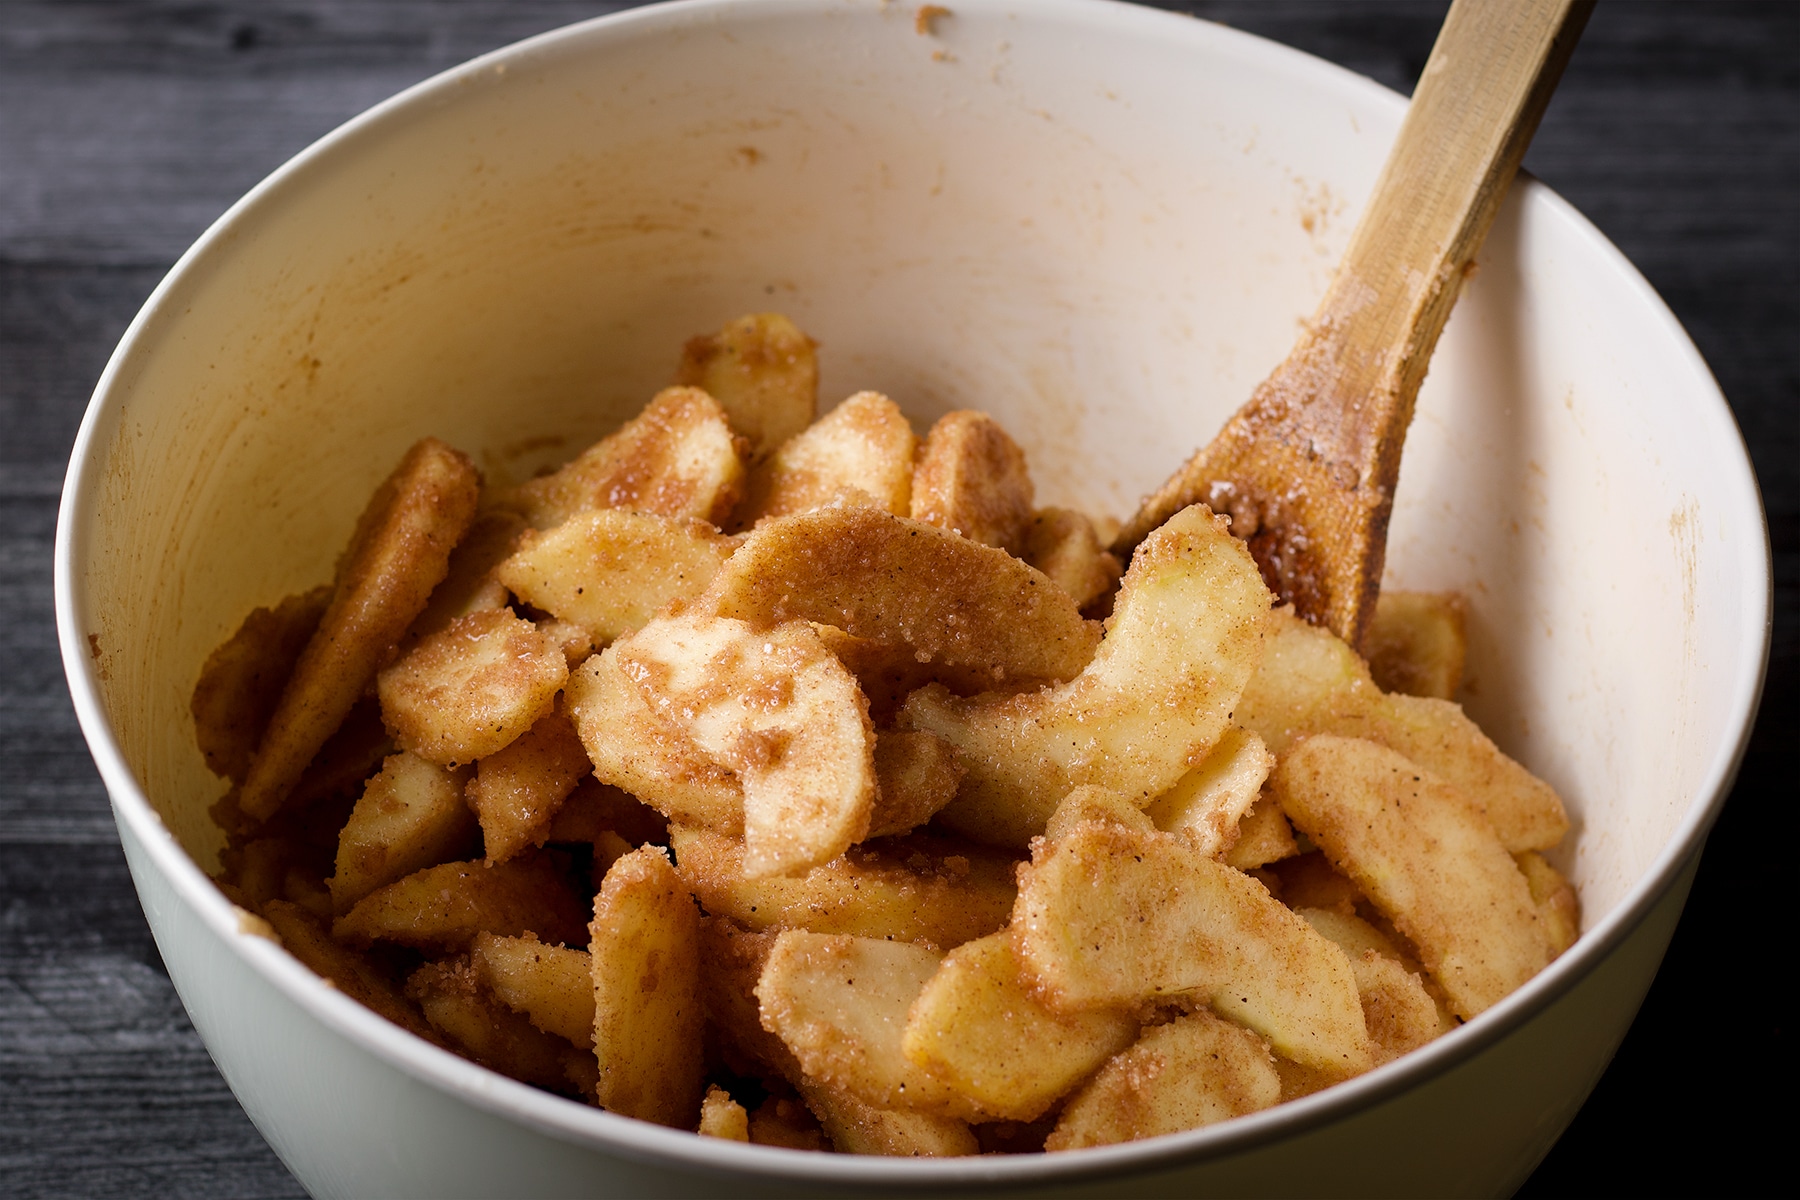 Stirring apples with cinnamon and sugar to make German Apple Pie